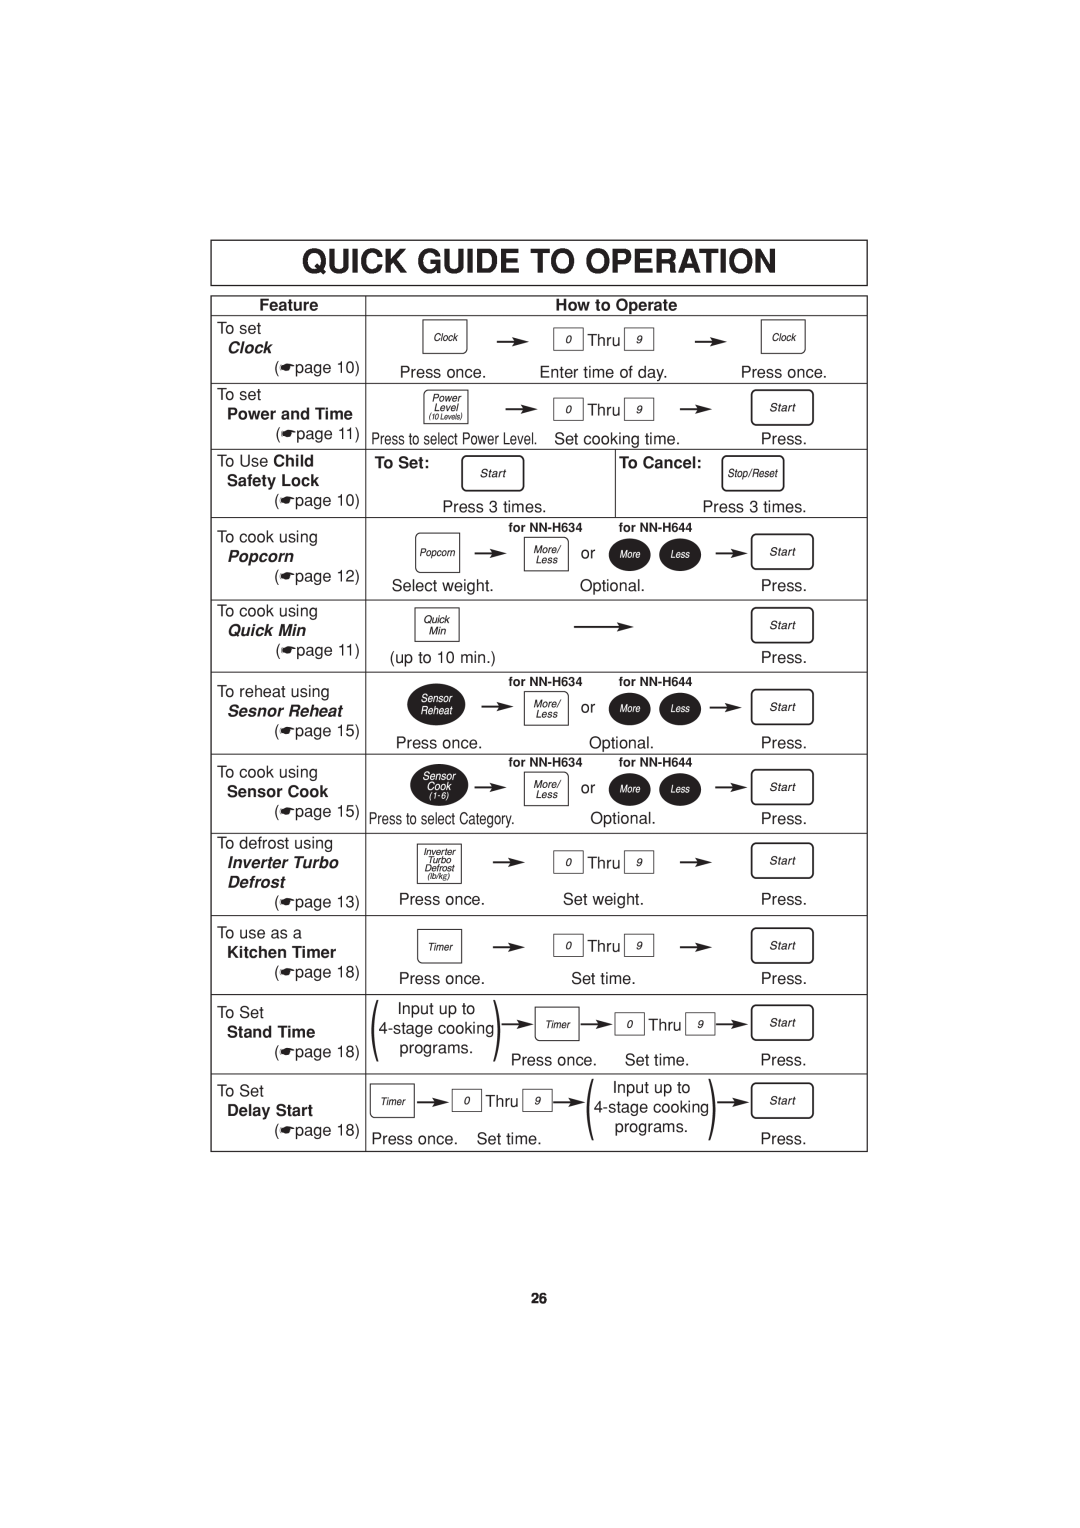 Panasonic NN-H644, NN-H634 Quick Guide To Operation, Clock, Popcorn, Quick Min, Sesnor Reheat, Inverter Turbo, Defrost 